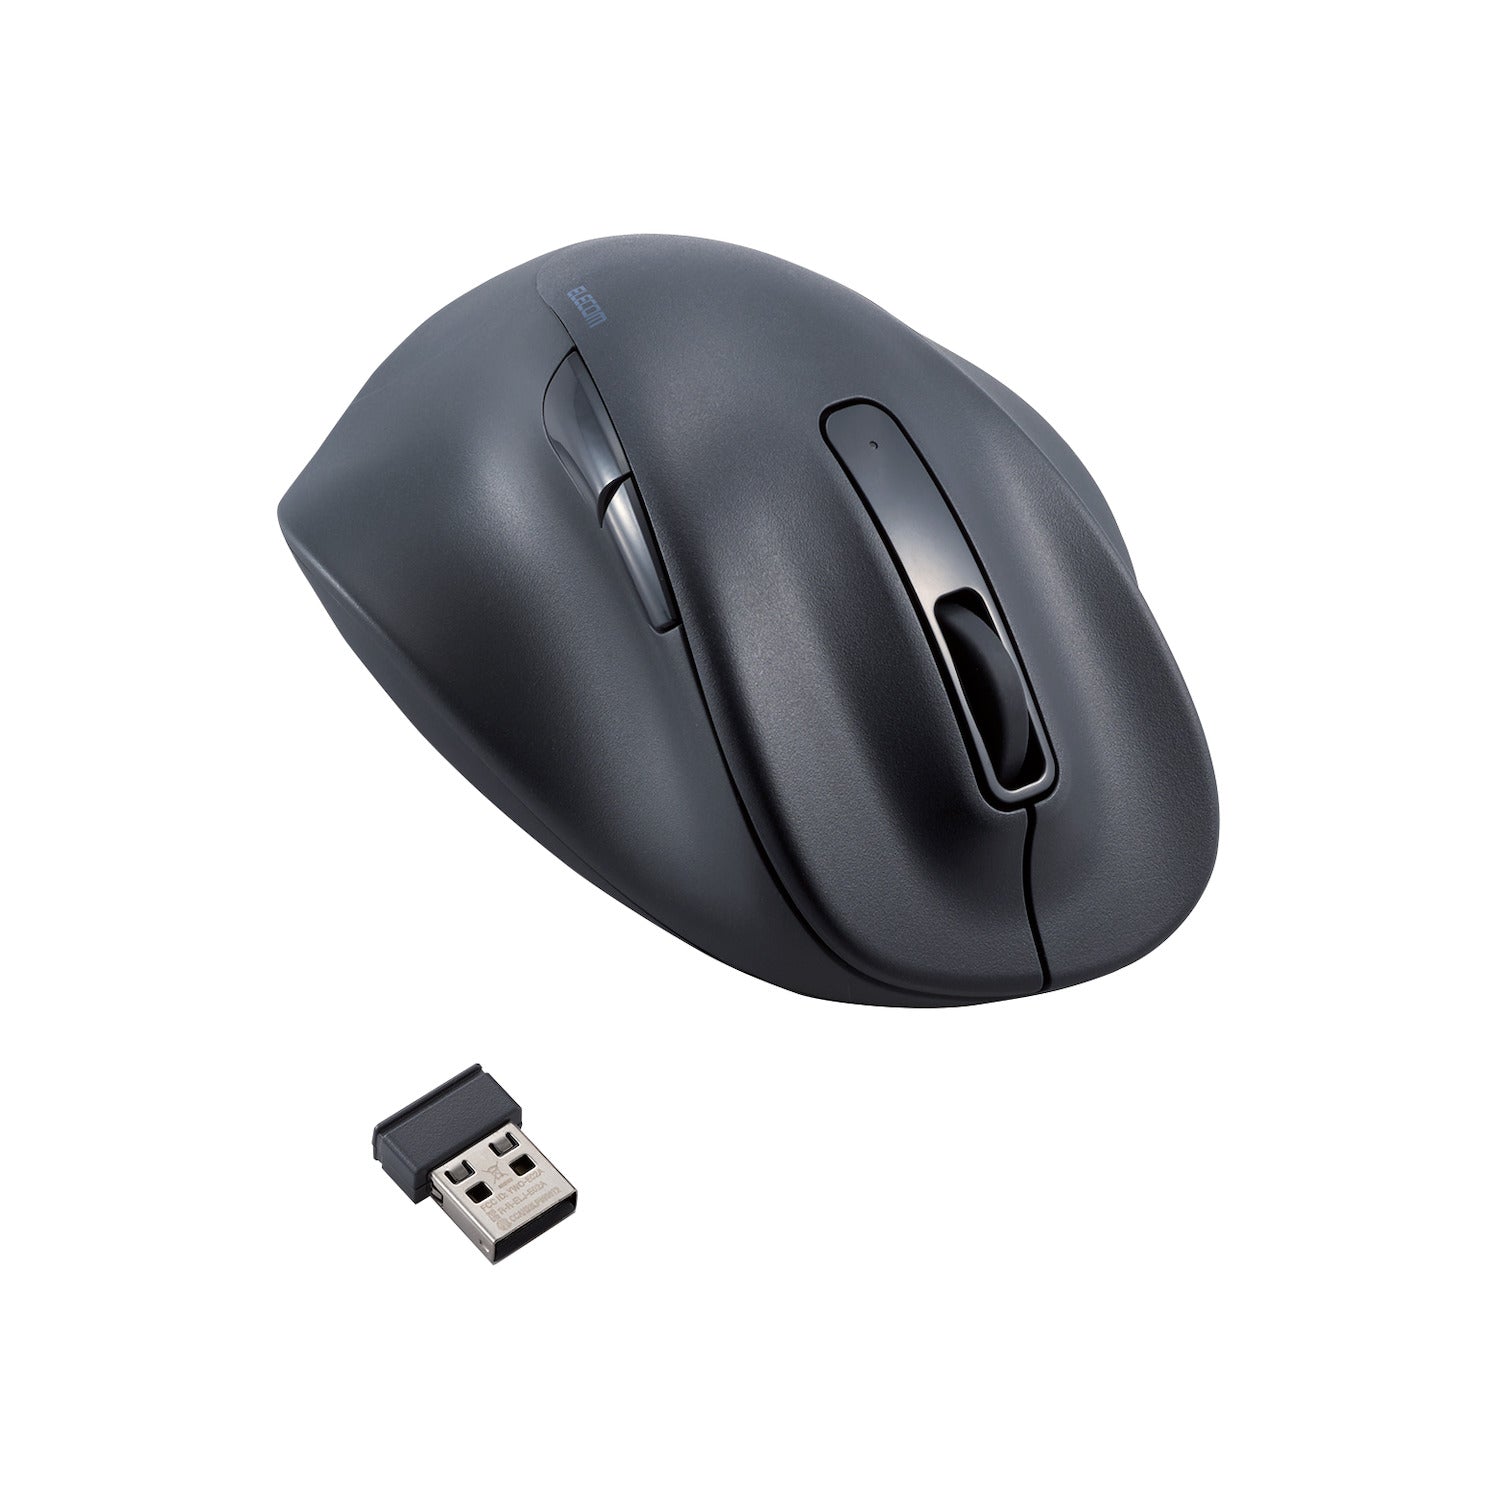 EX-G Wireless USB Ergonomic Left-handed Mouse